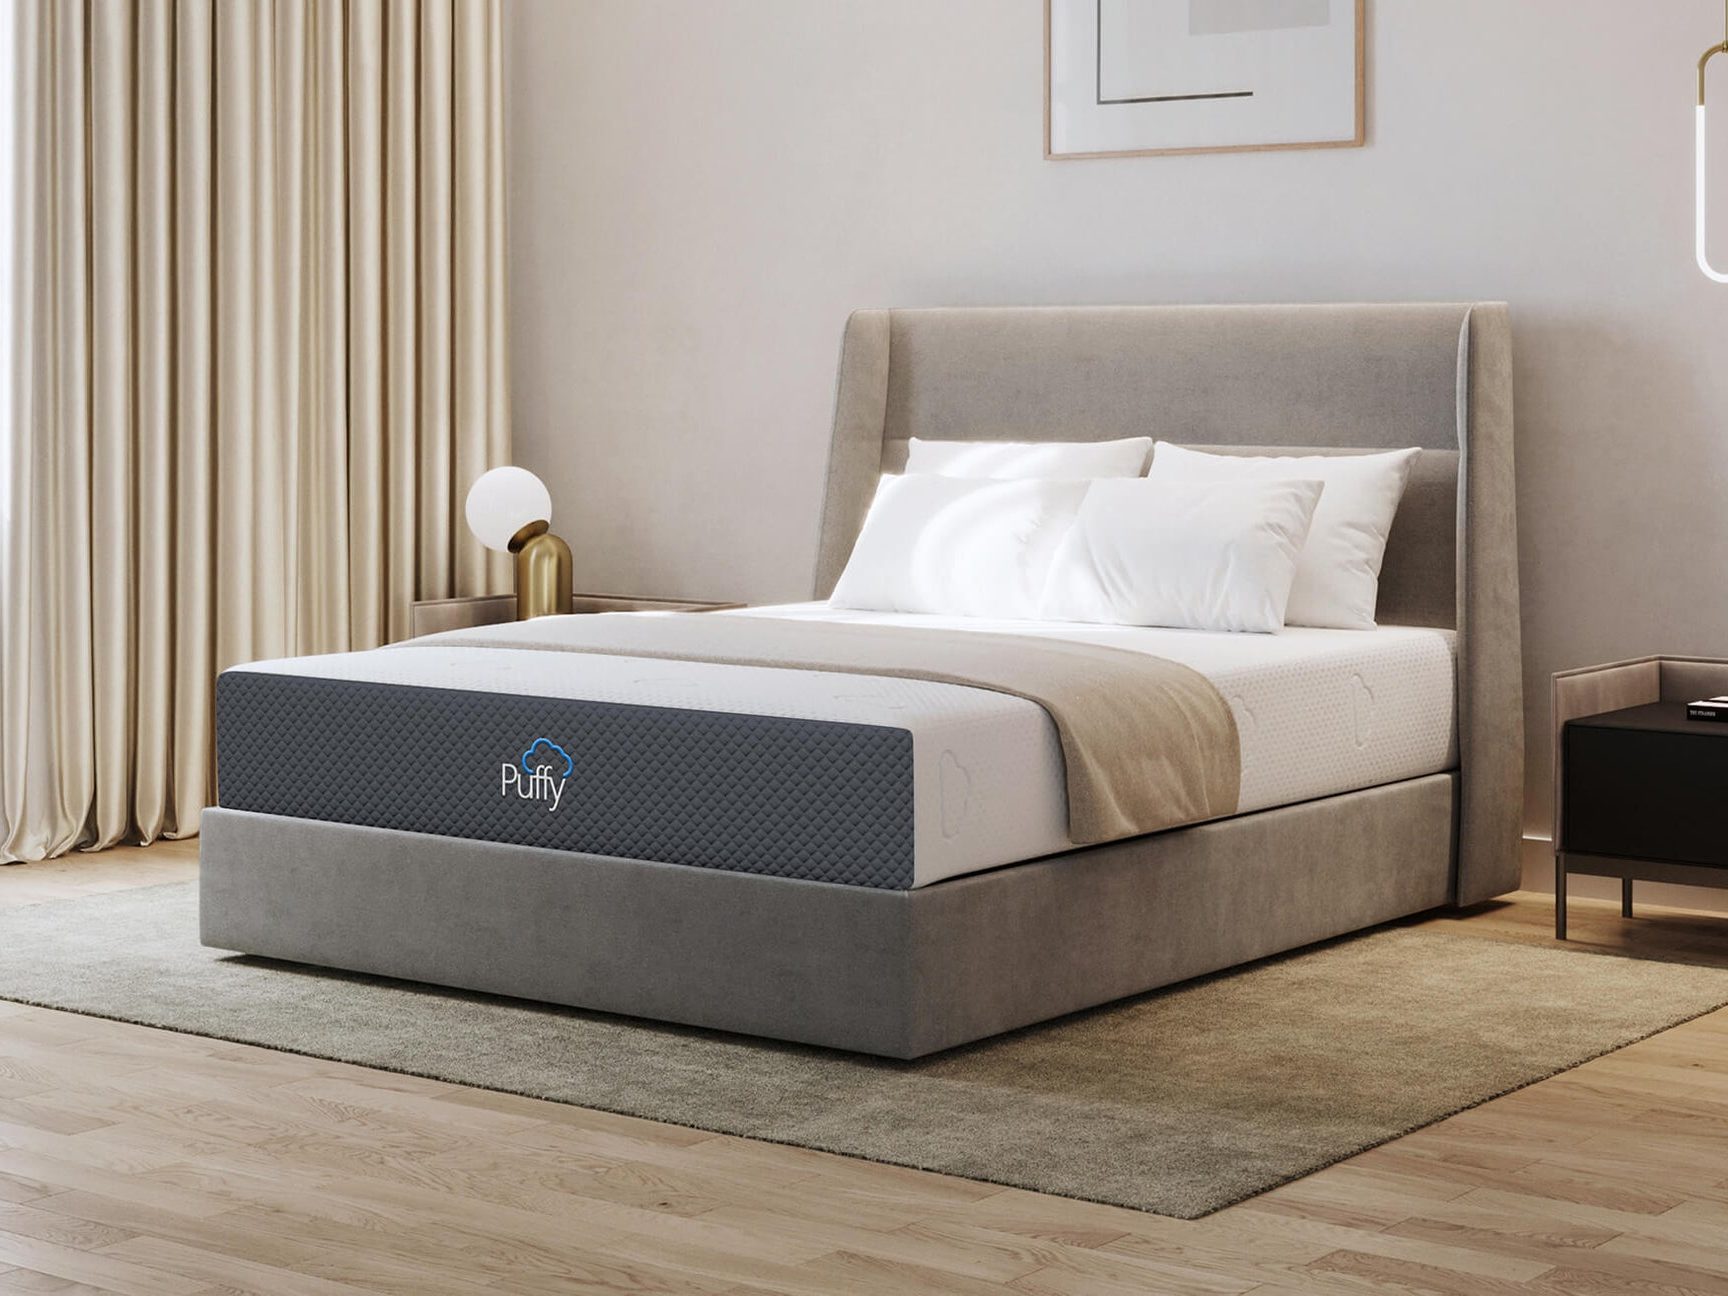 ellencuense 8 inch mattress